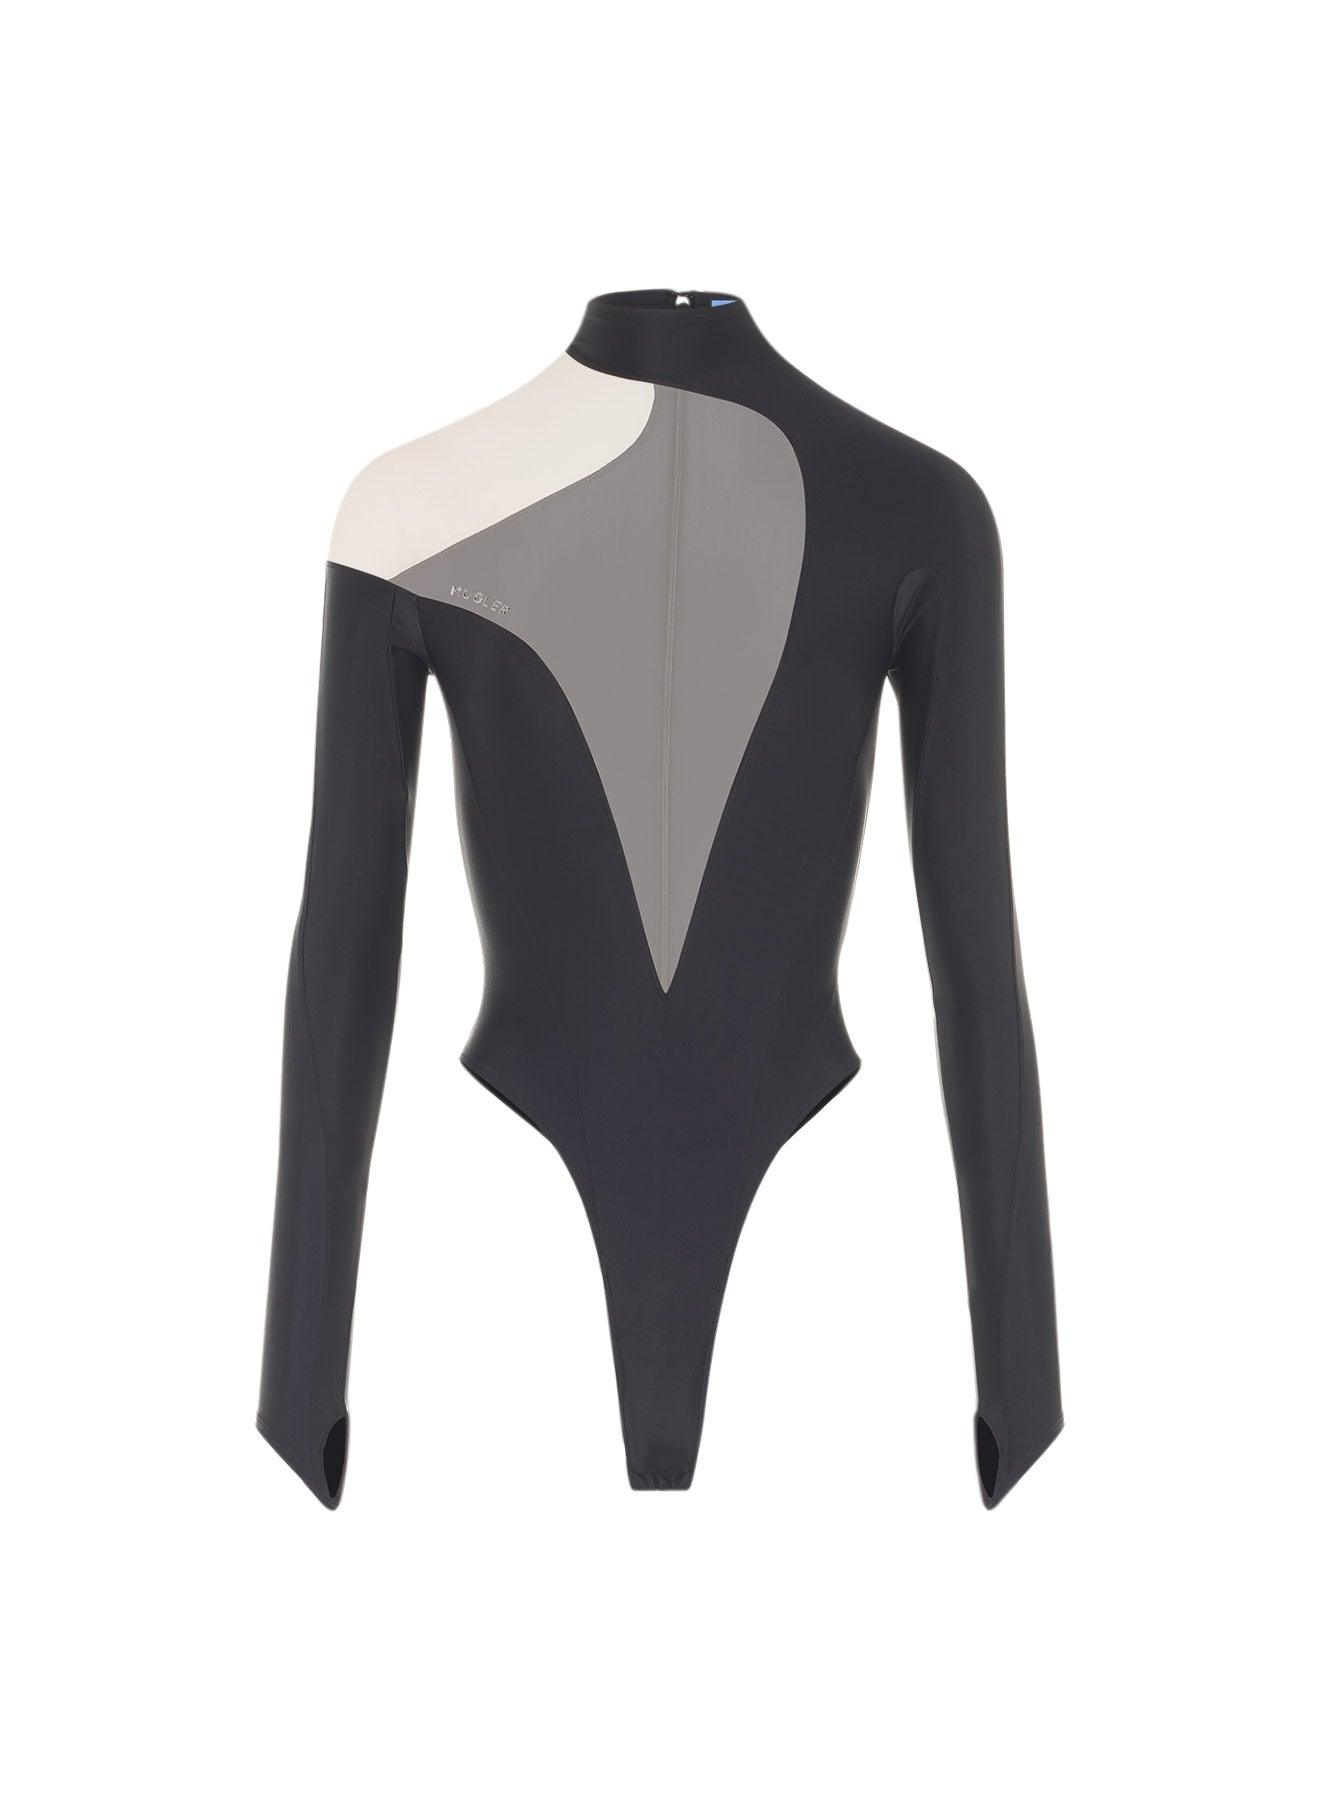 Asymmetrical illusion bodysuit